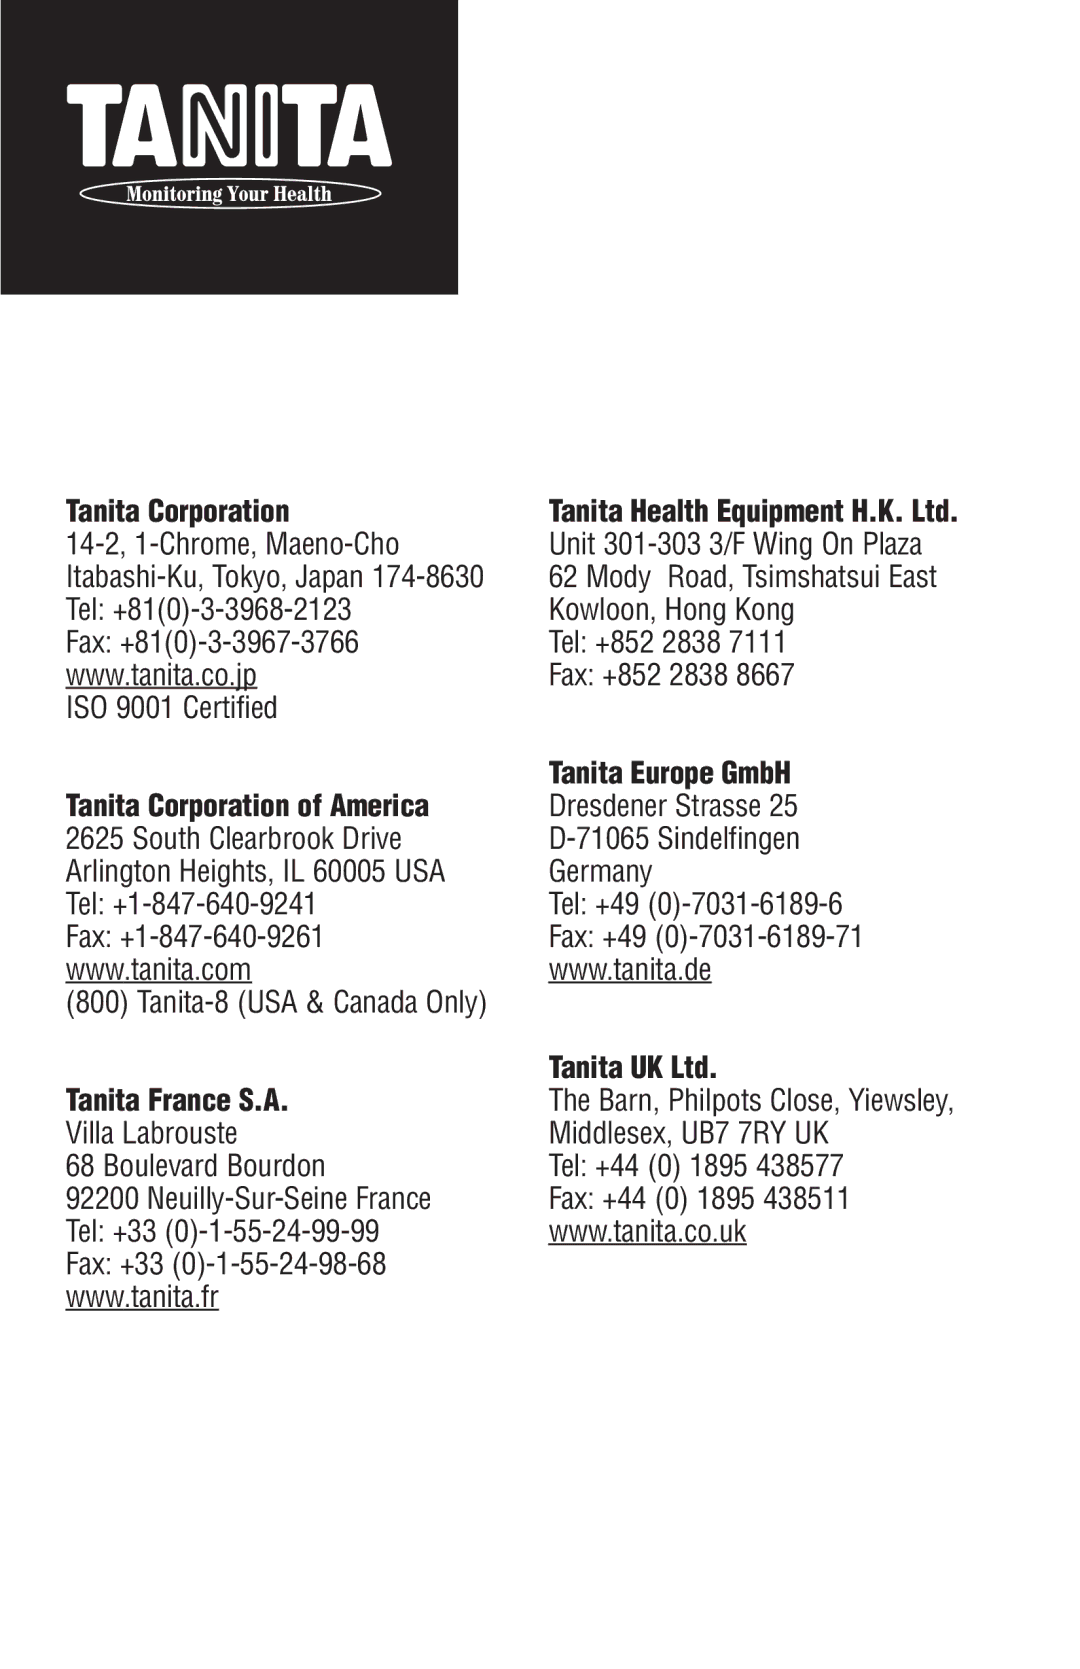 Tanita HD-335 operating instructions Tanita Corporation of America Tanita Europe GmbH, Tanita France S.A 